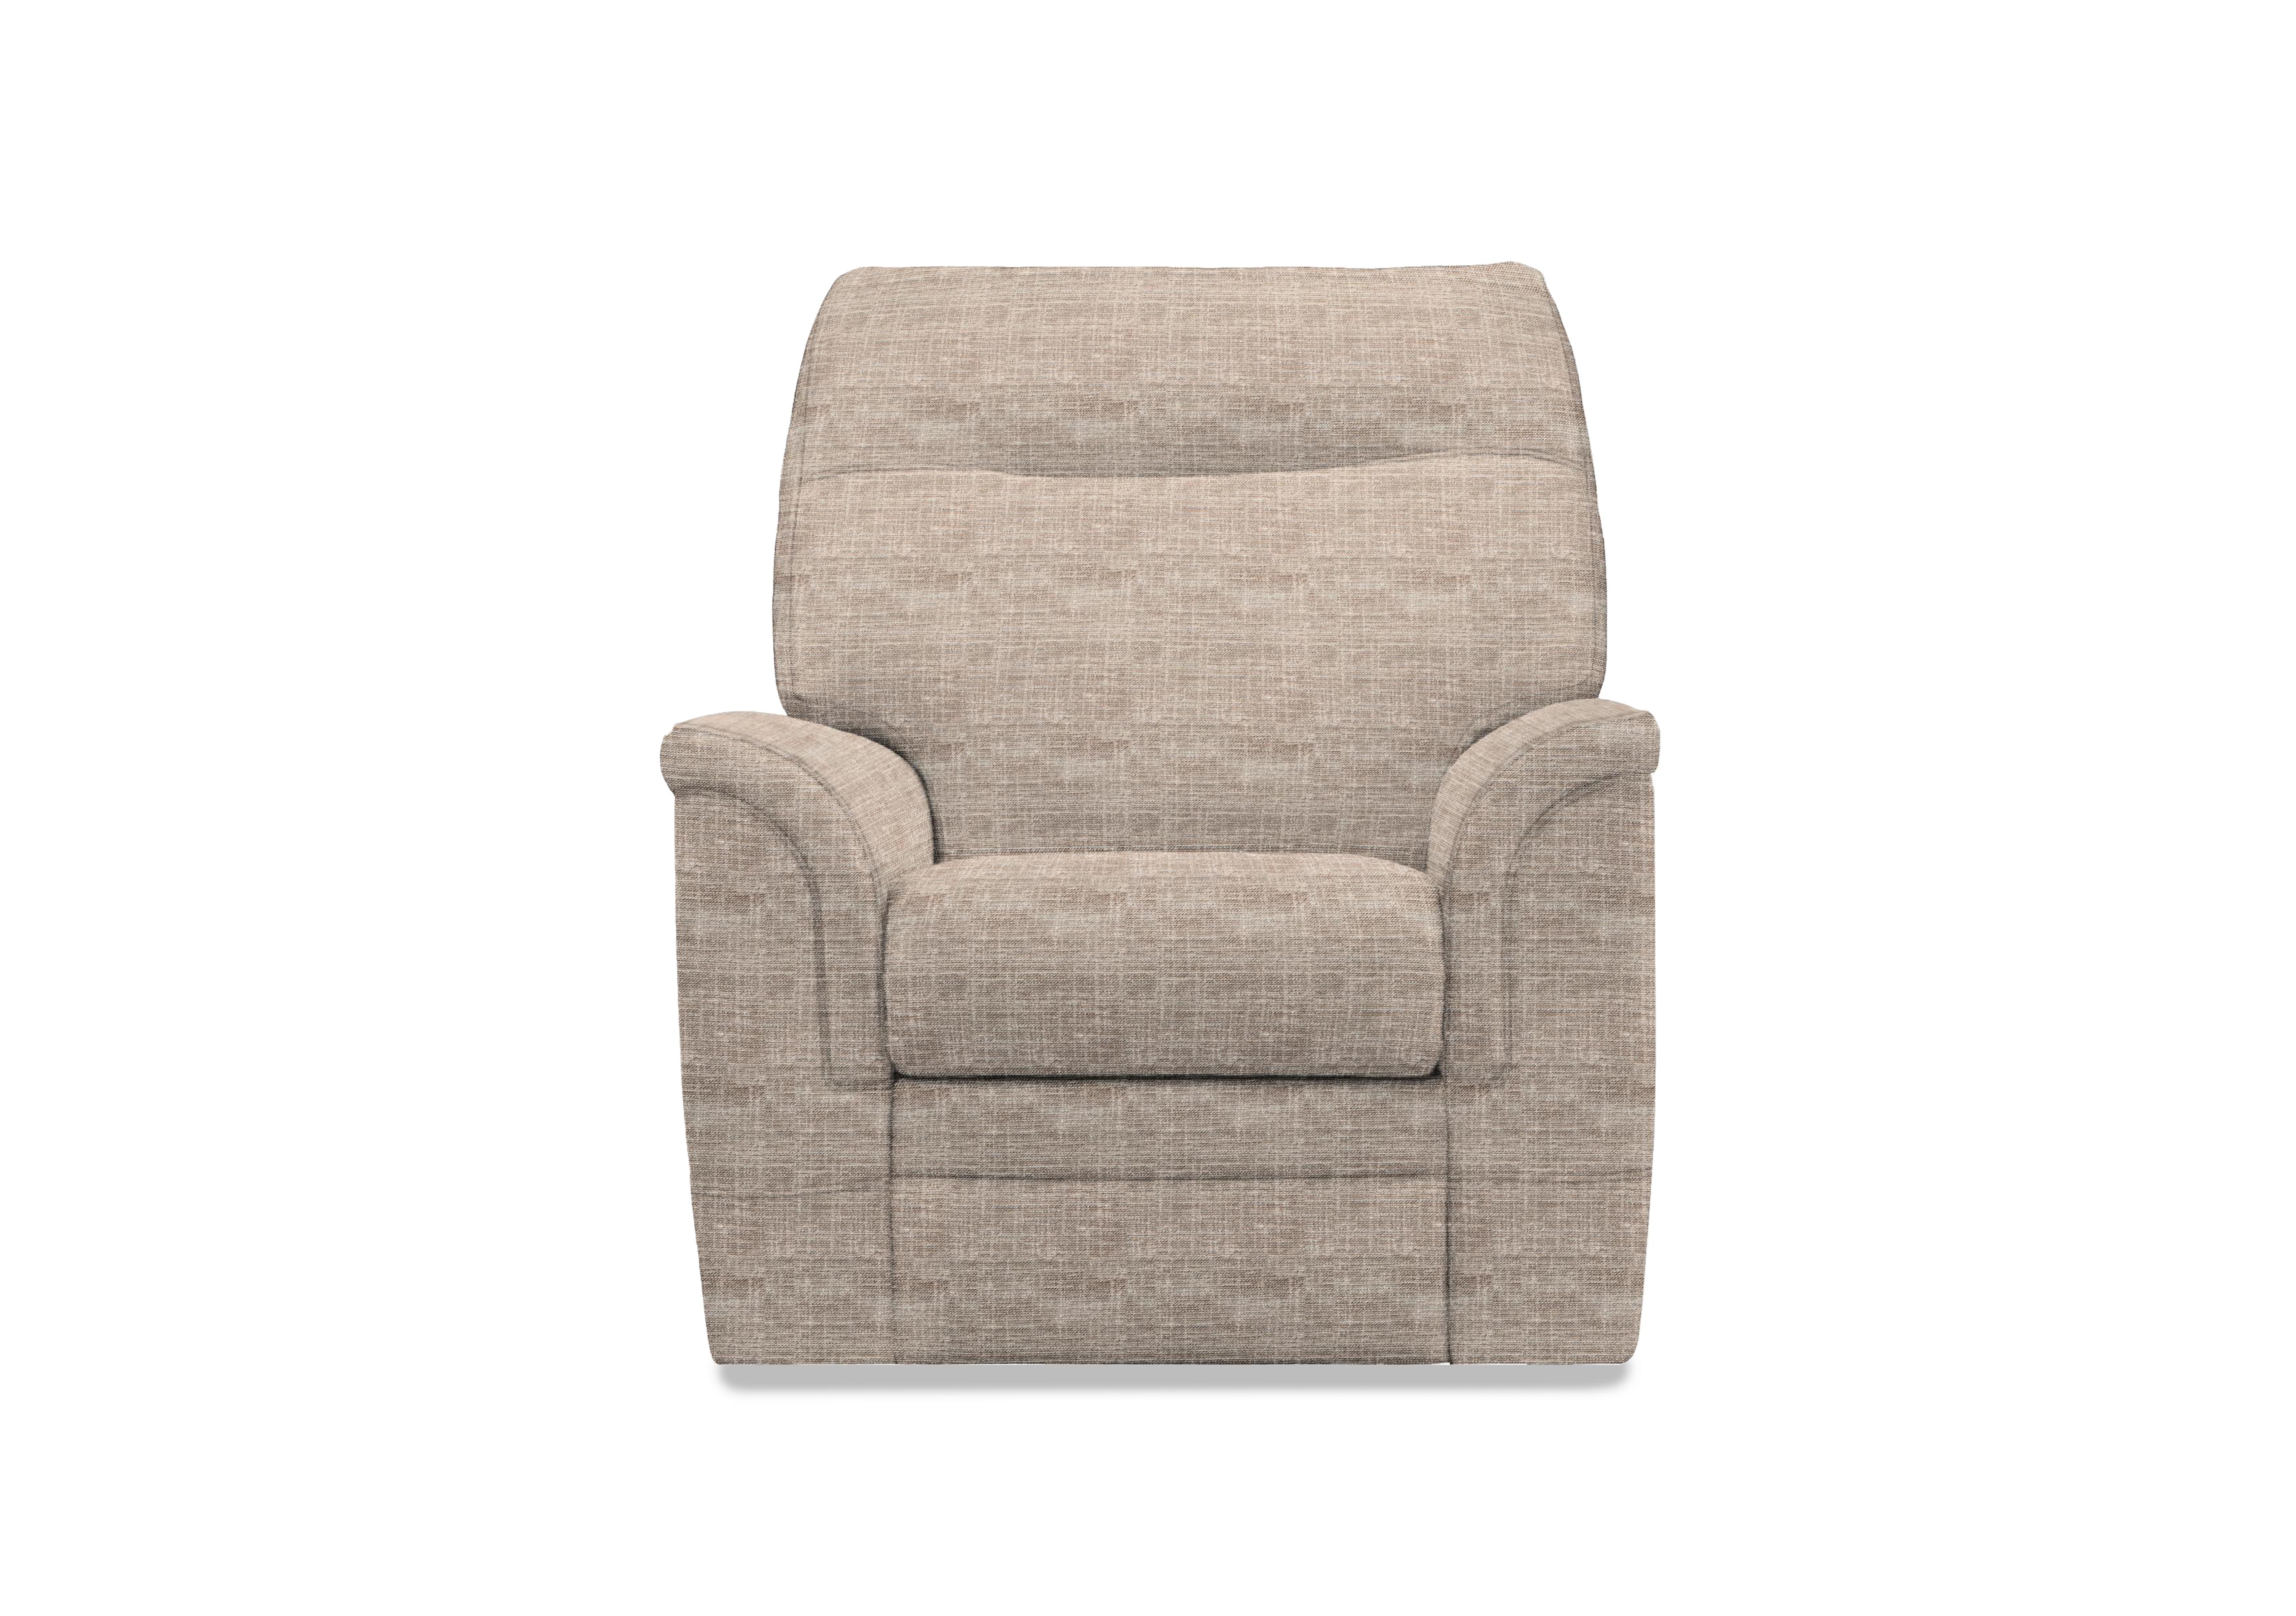 Hudson 23 Fabric Chair in Dash Oatmeal 001497-0051 on Furniture Village